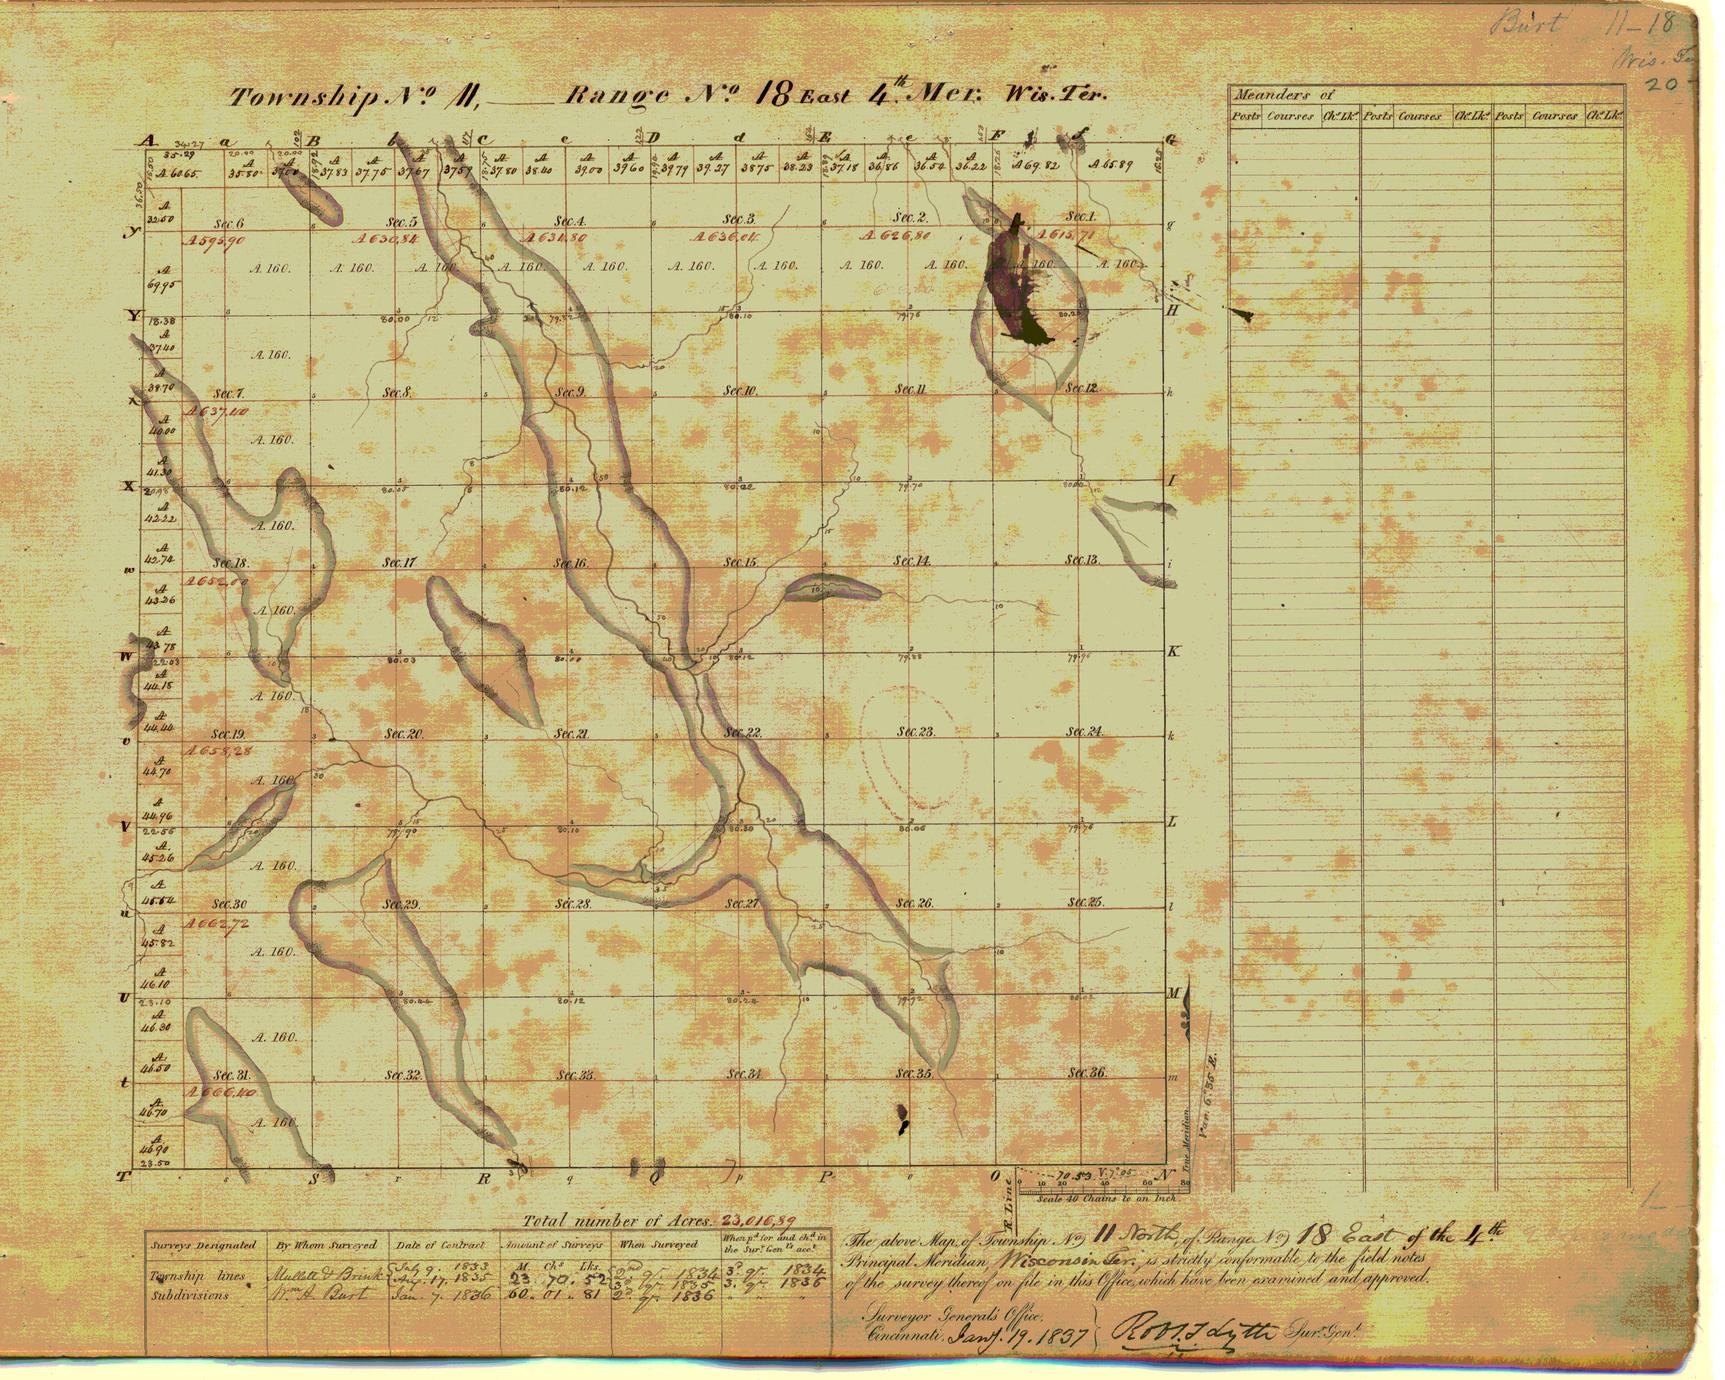 [Public Land Survey System map: Wisconsin Township 11 North, Range 18 East]